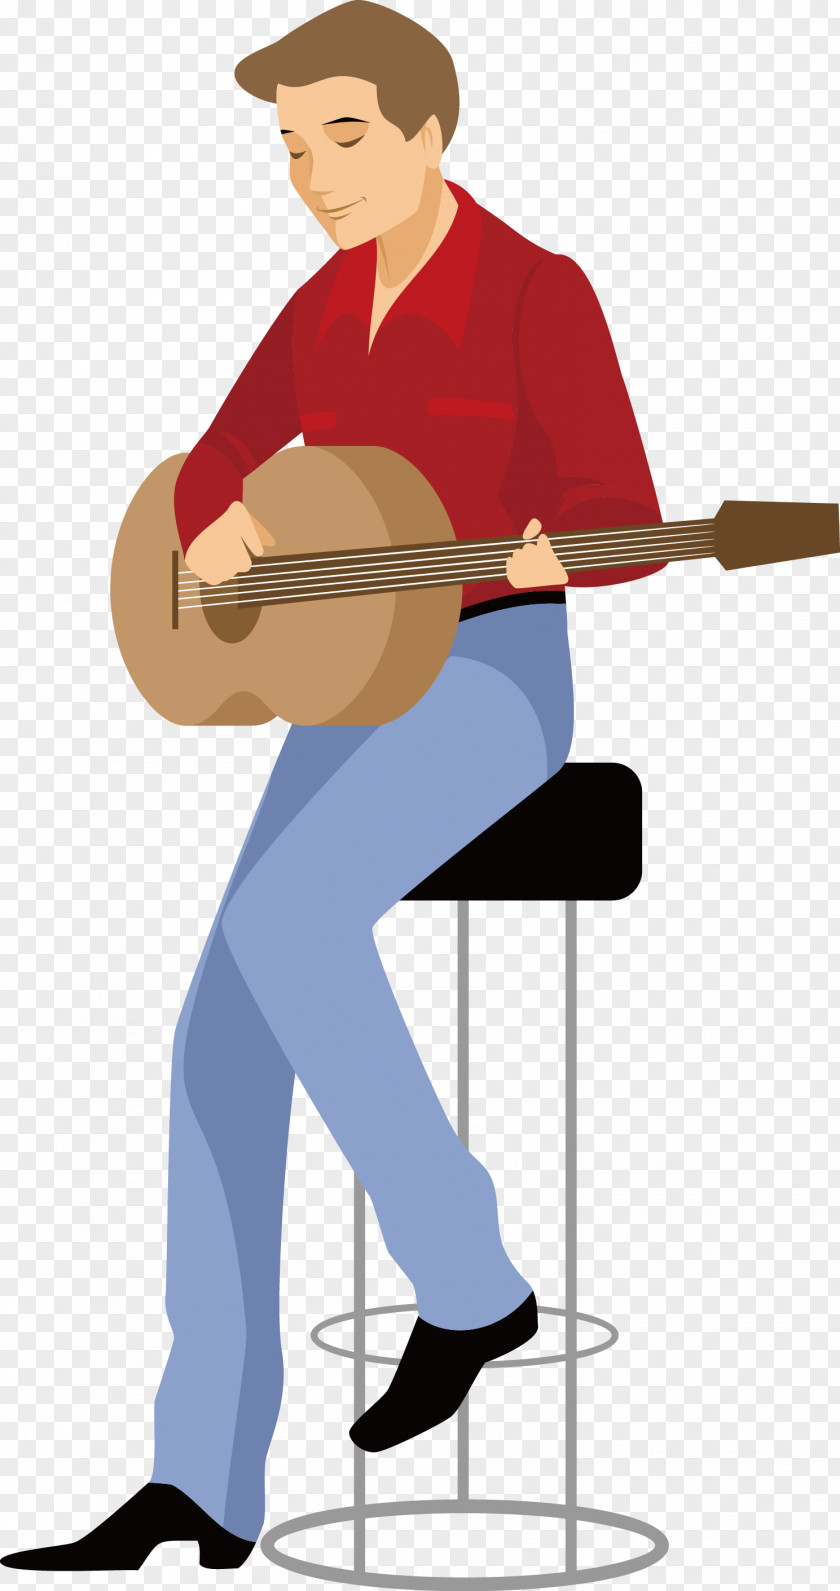 Guitar Man Vector Cartoon Illustration PNG